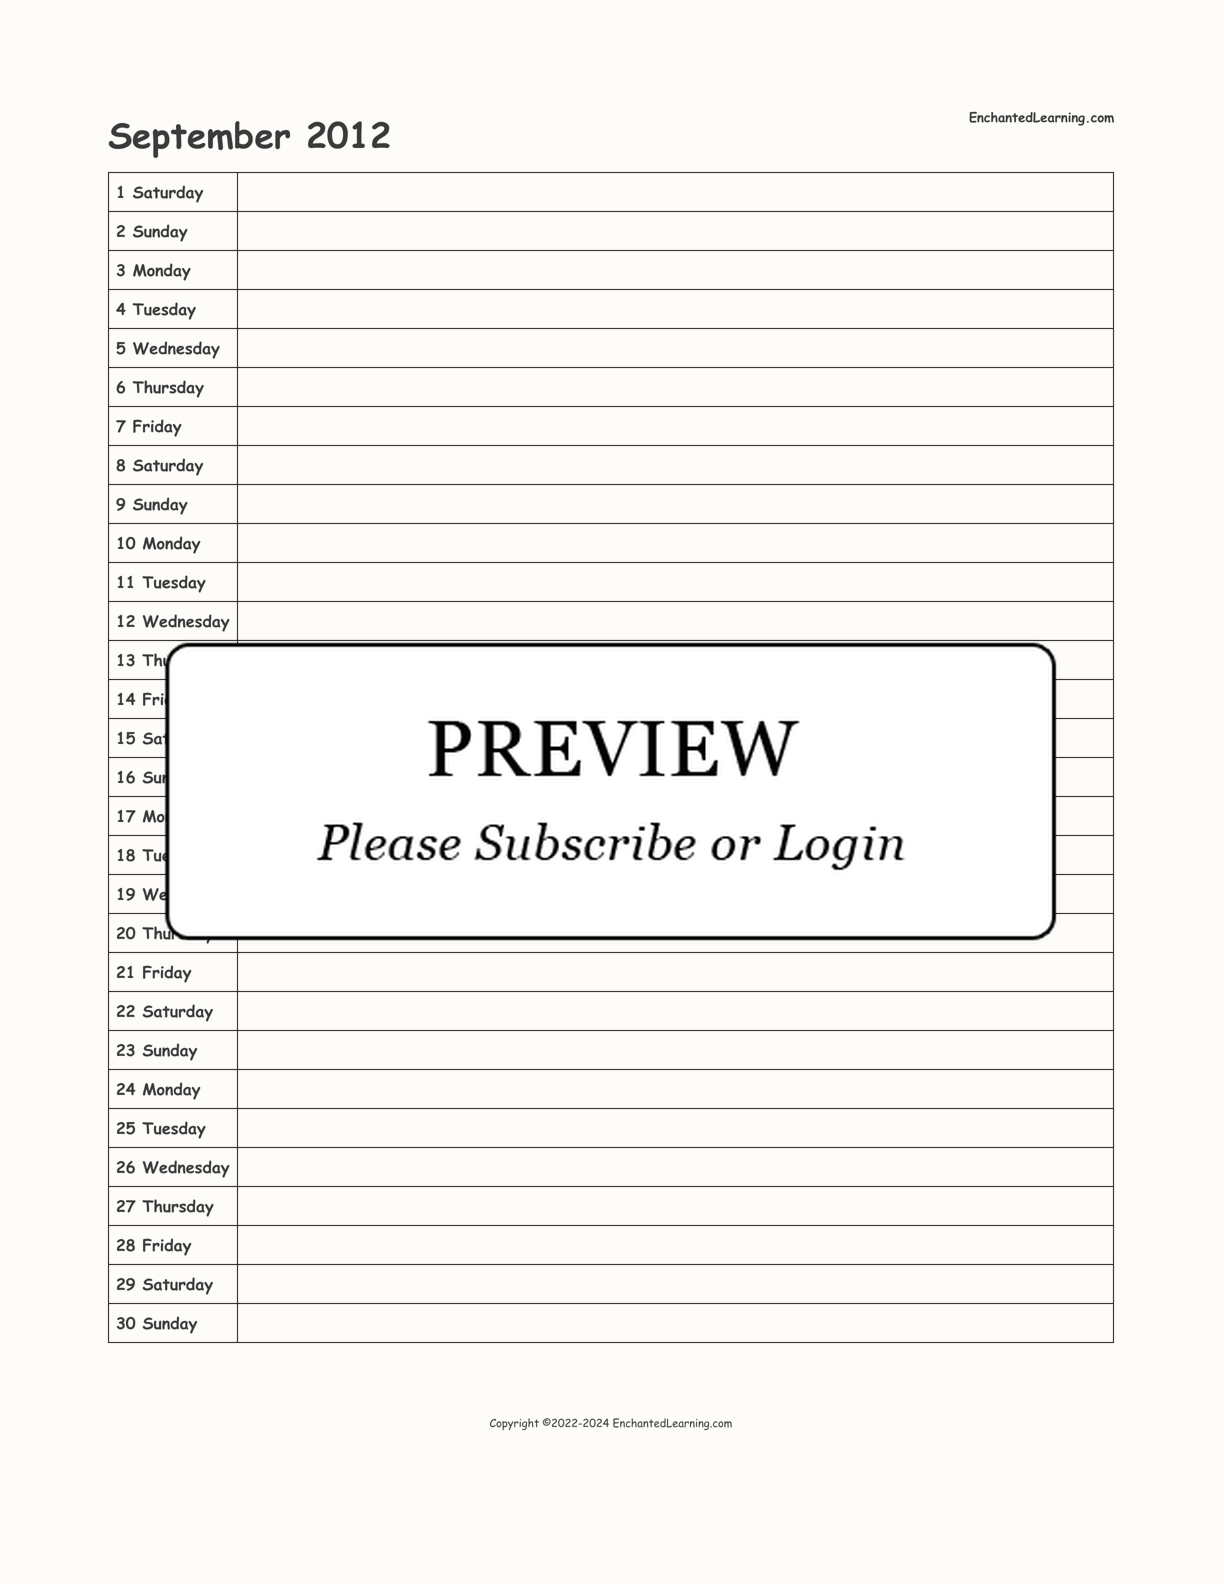 September 2012 Calendar interactive printout page 1